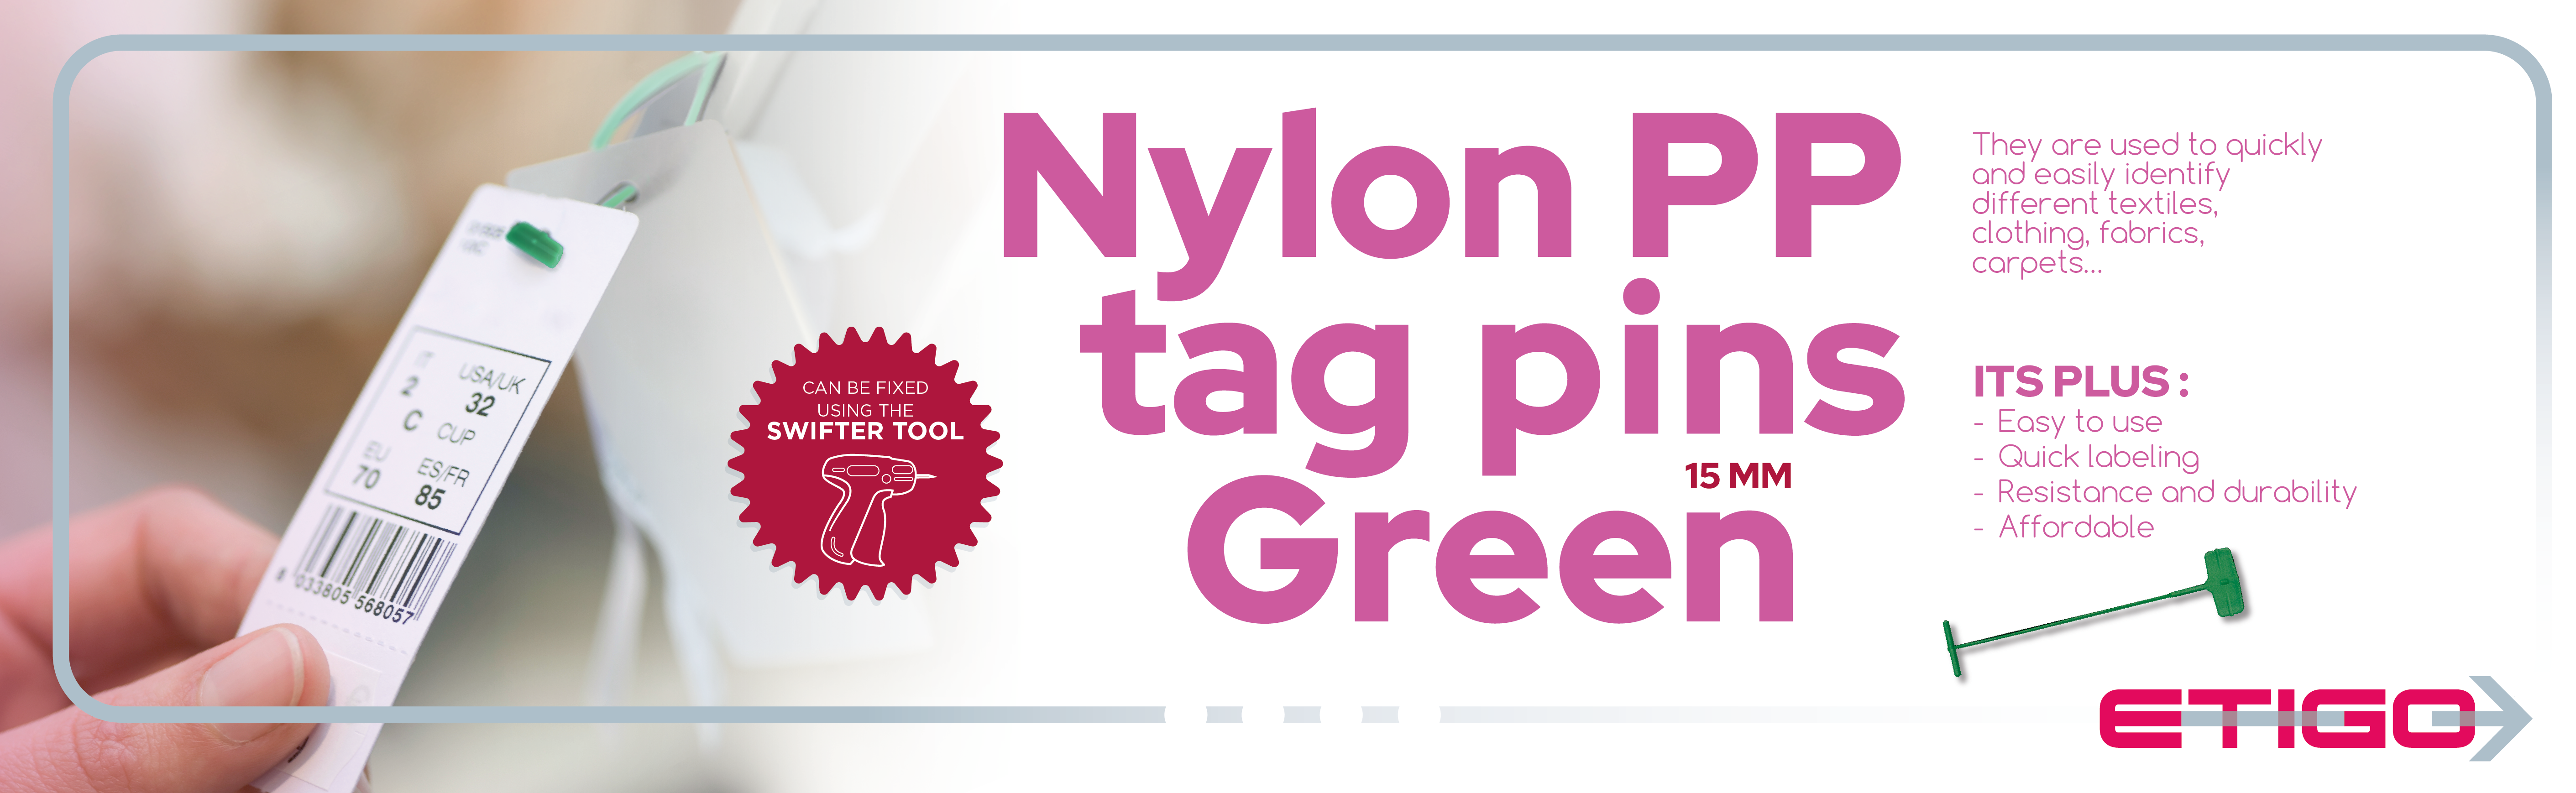 Nylon pp tag pins 